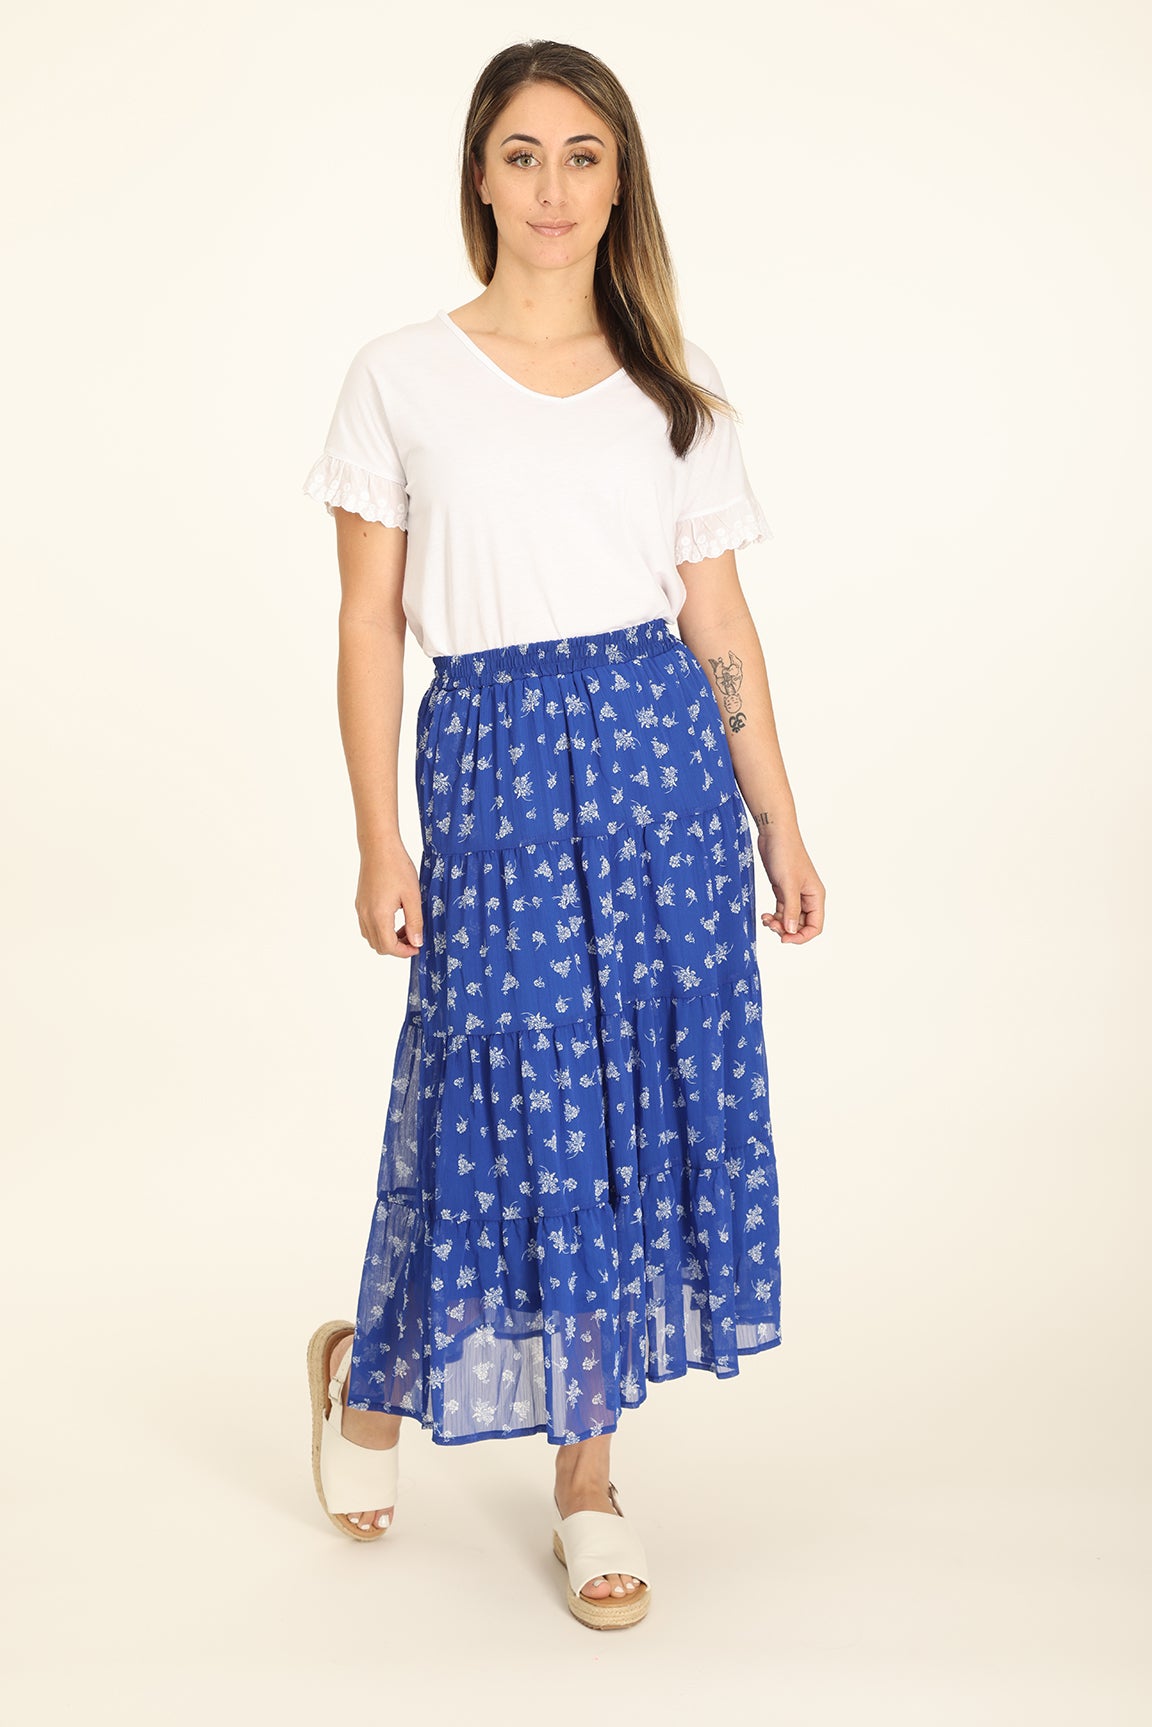 Printed Yoryu Chiffon Skirt in Blue | Caroline Eve